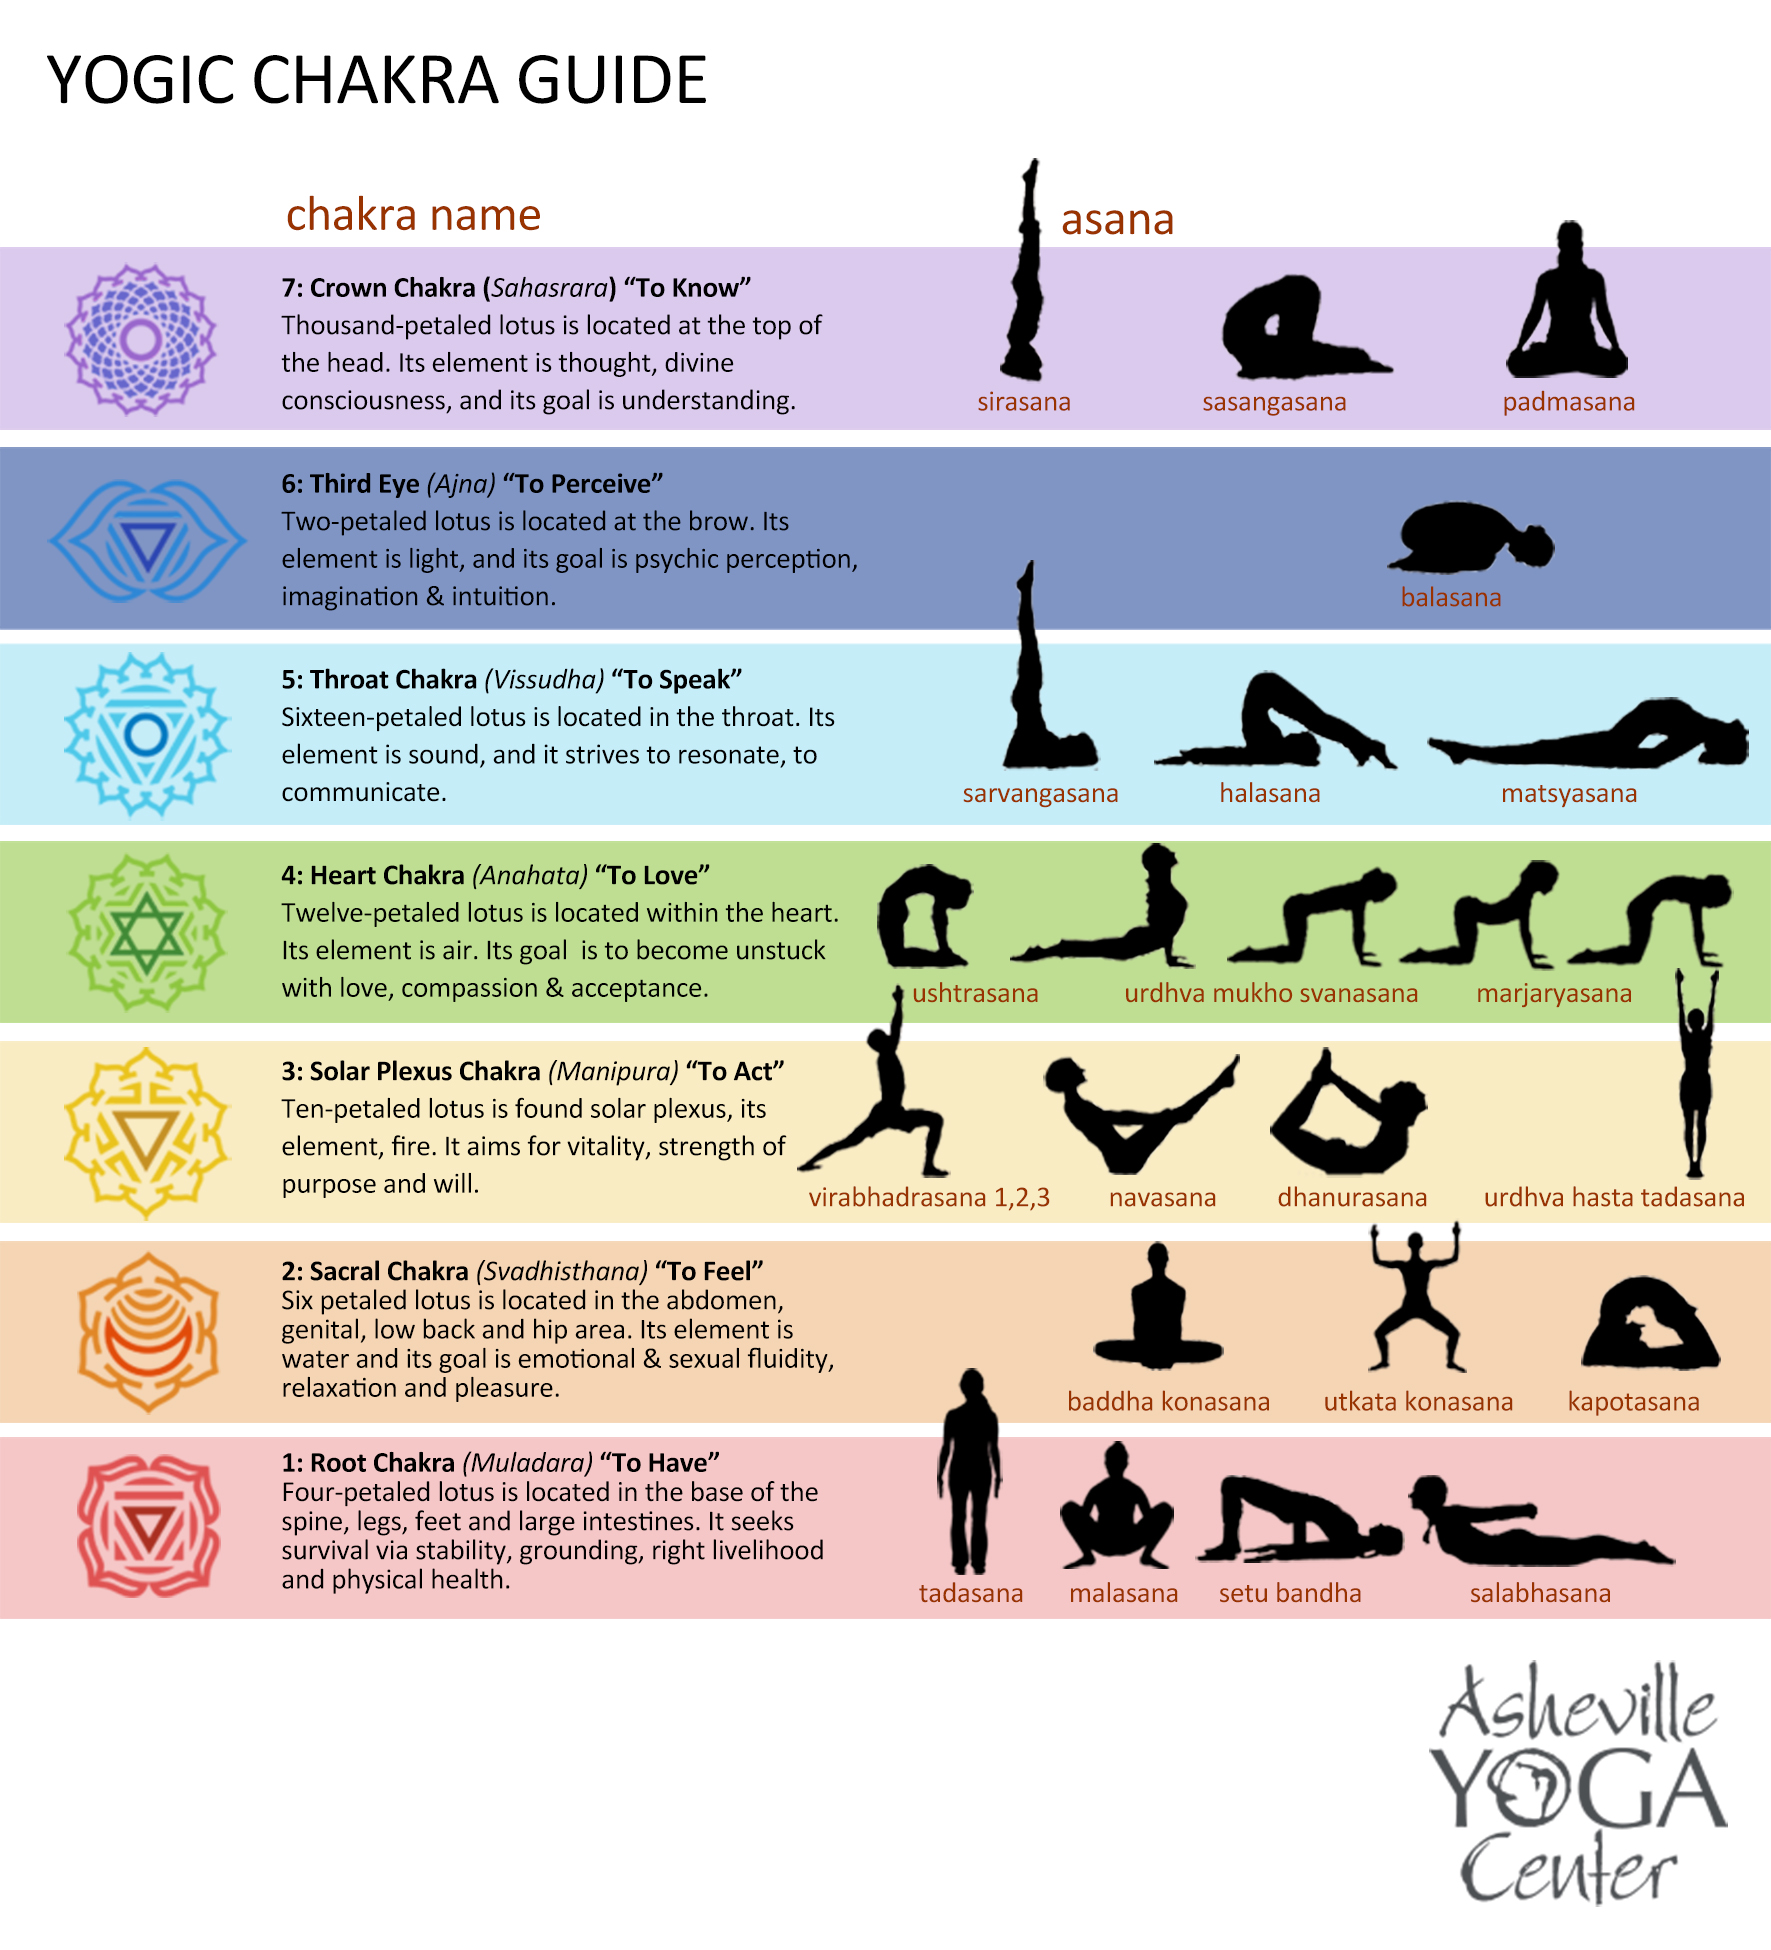 Yoga Chakra Guide Asheville Yoga Center Blog Post